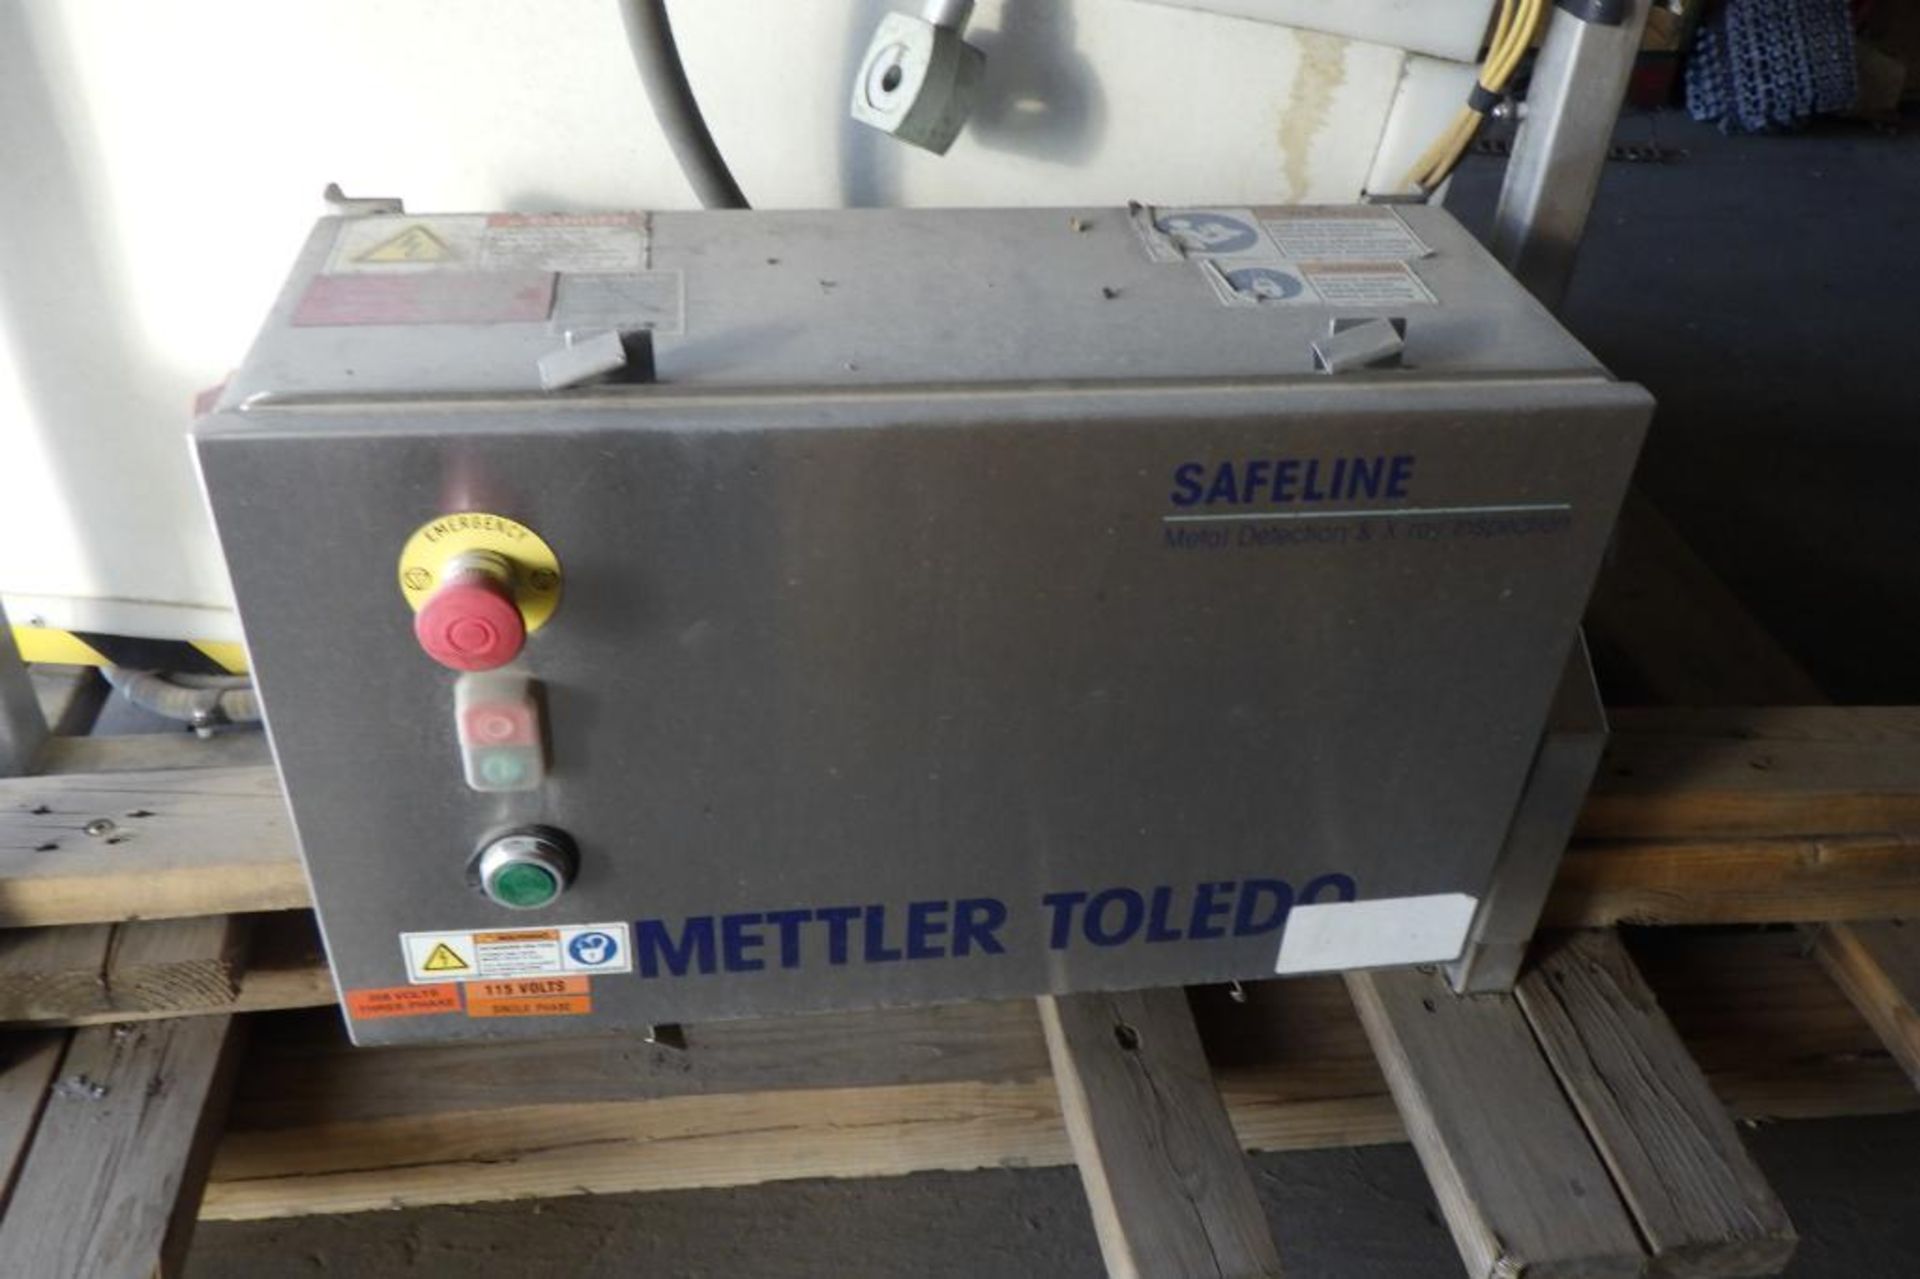 Safeline metal detector with conveyor - Image 8 of 16